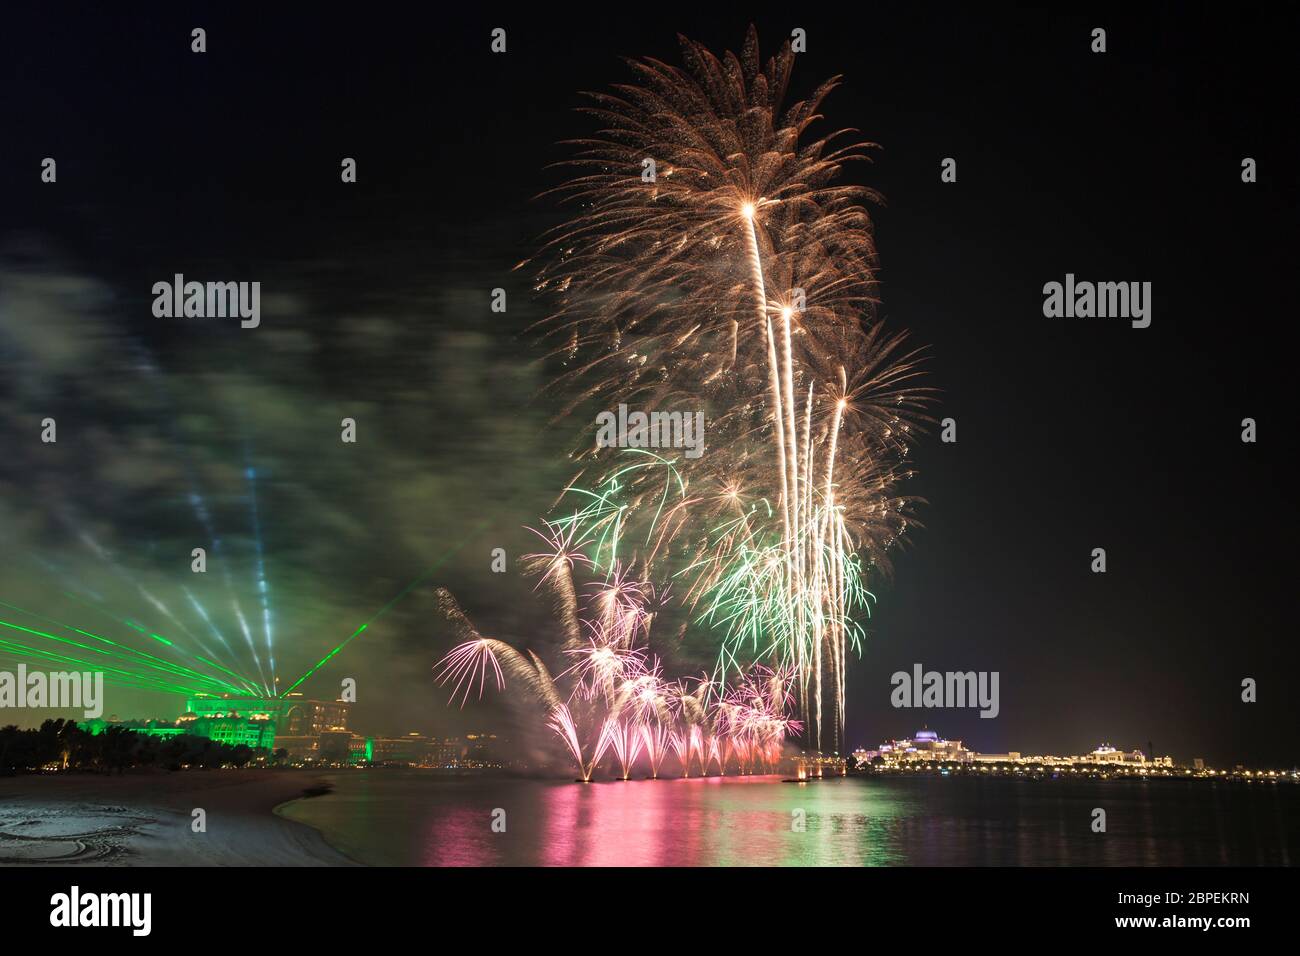 Tha 45th UAE National Day celebration fireworks in Abu Dhabi. United Arab Emirates, Middle East Stock Photo